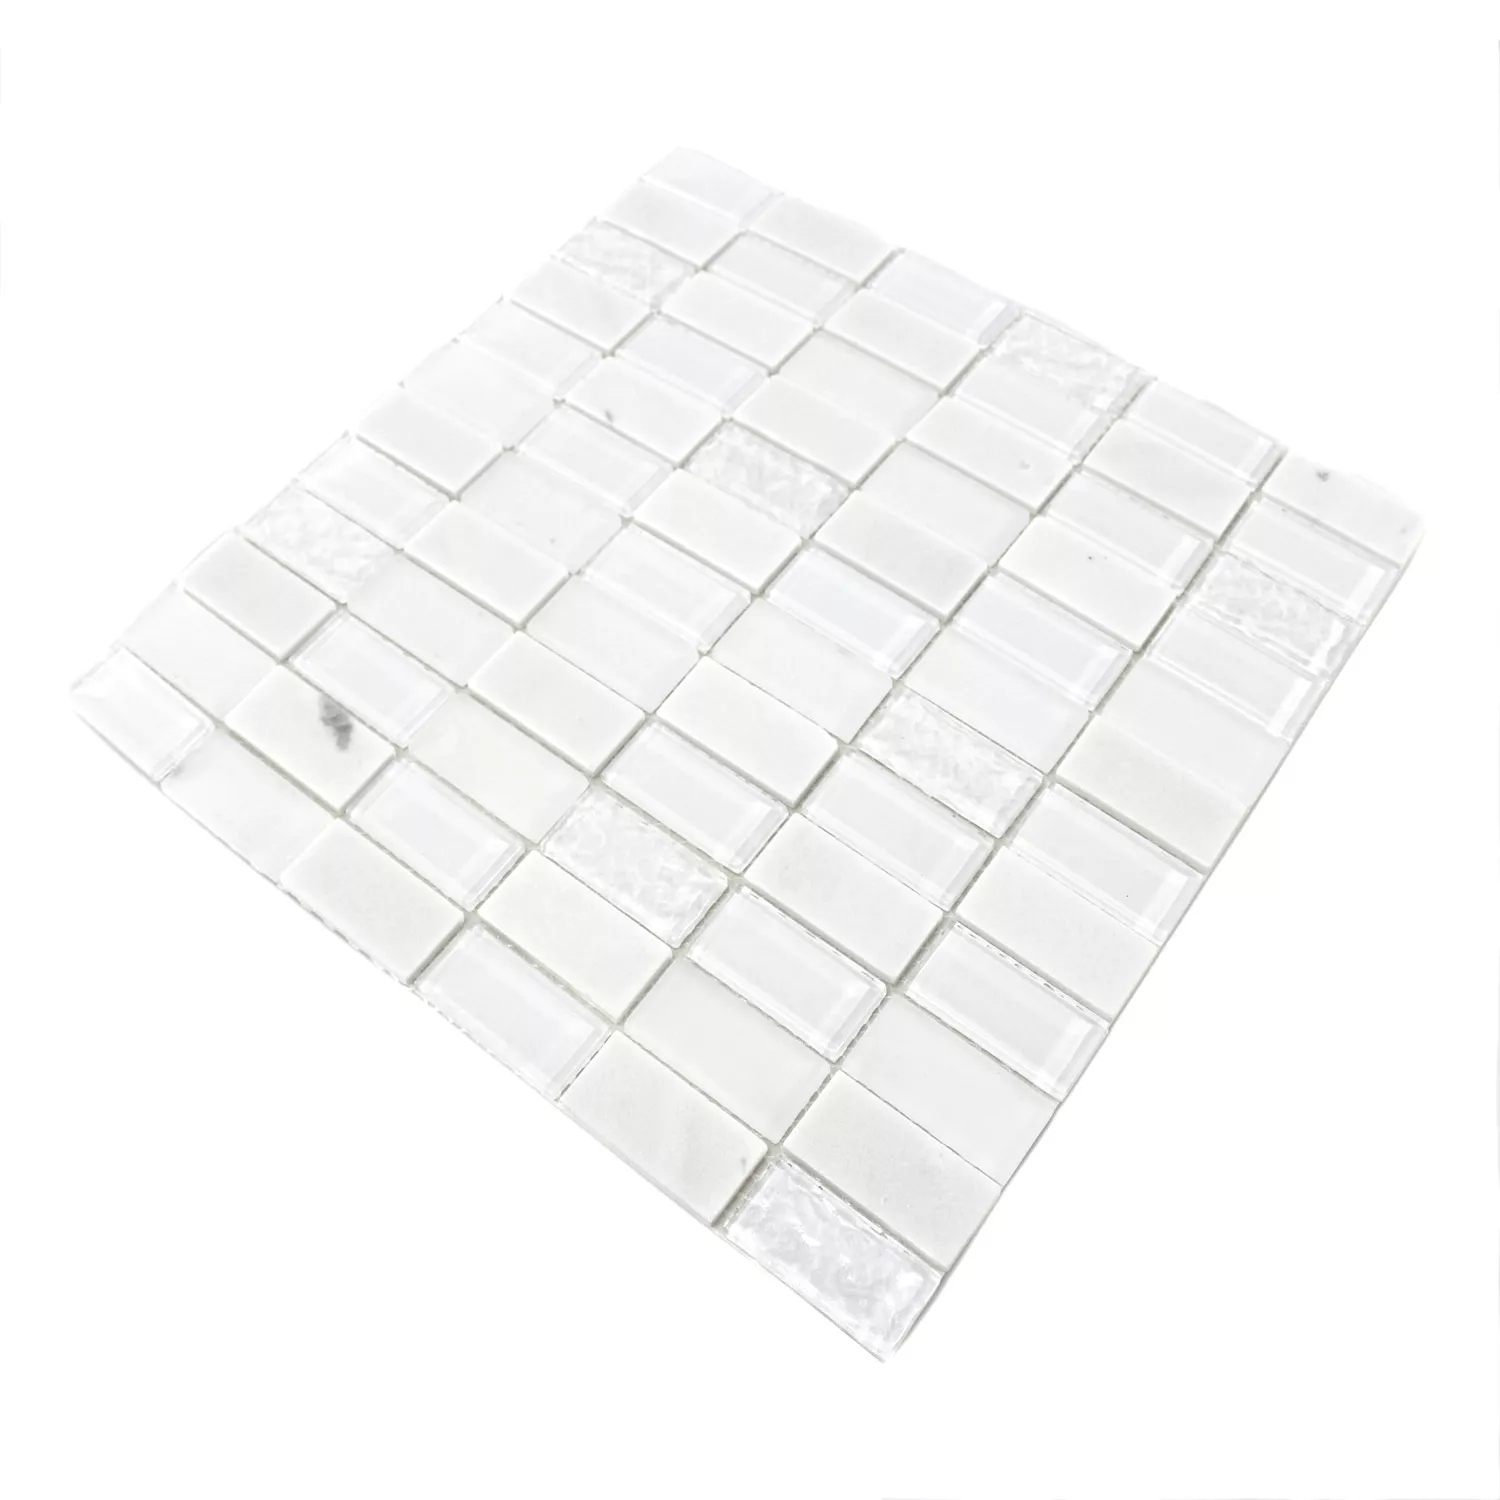 Autoadesivoe Mosaico Pietra Naturale Vetro Mix Bianco Lucidato